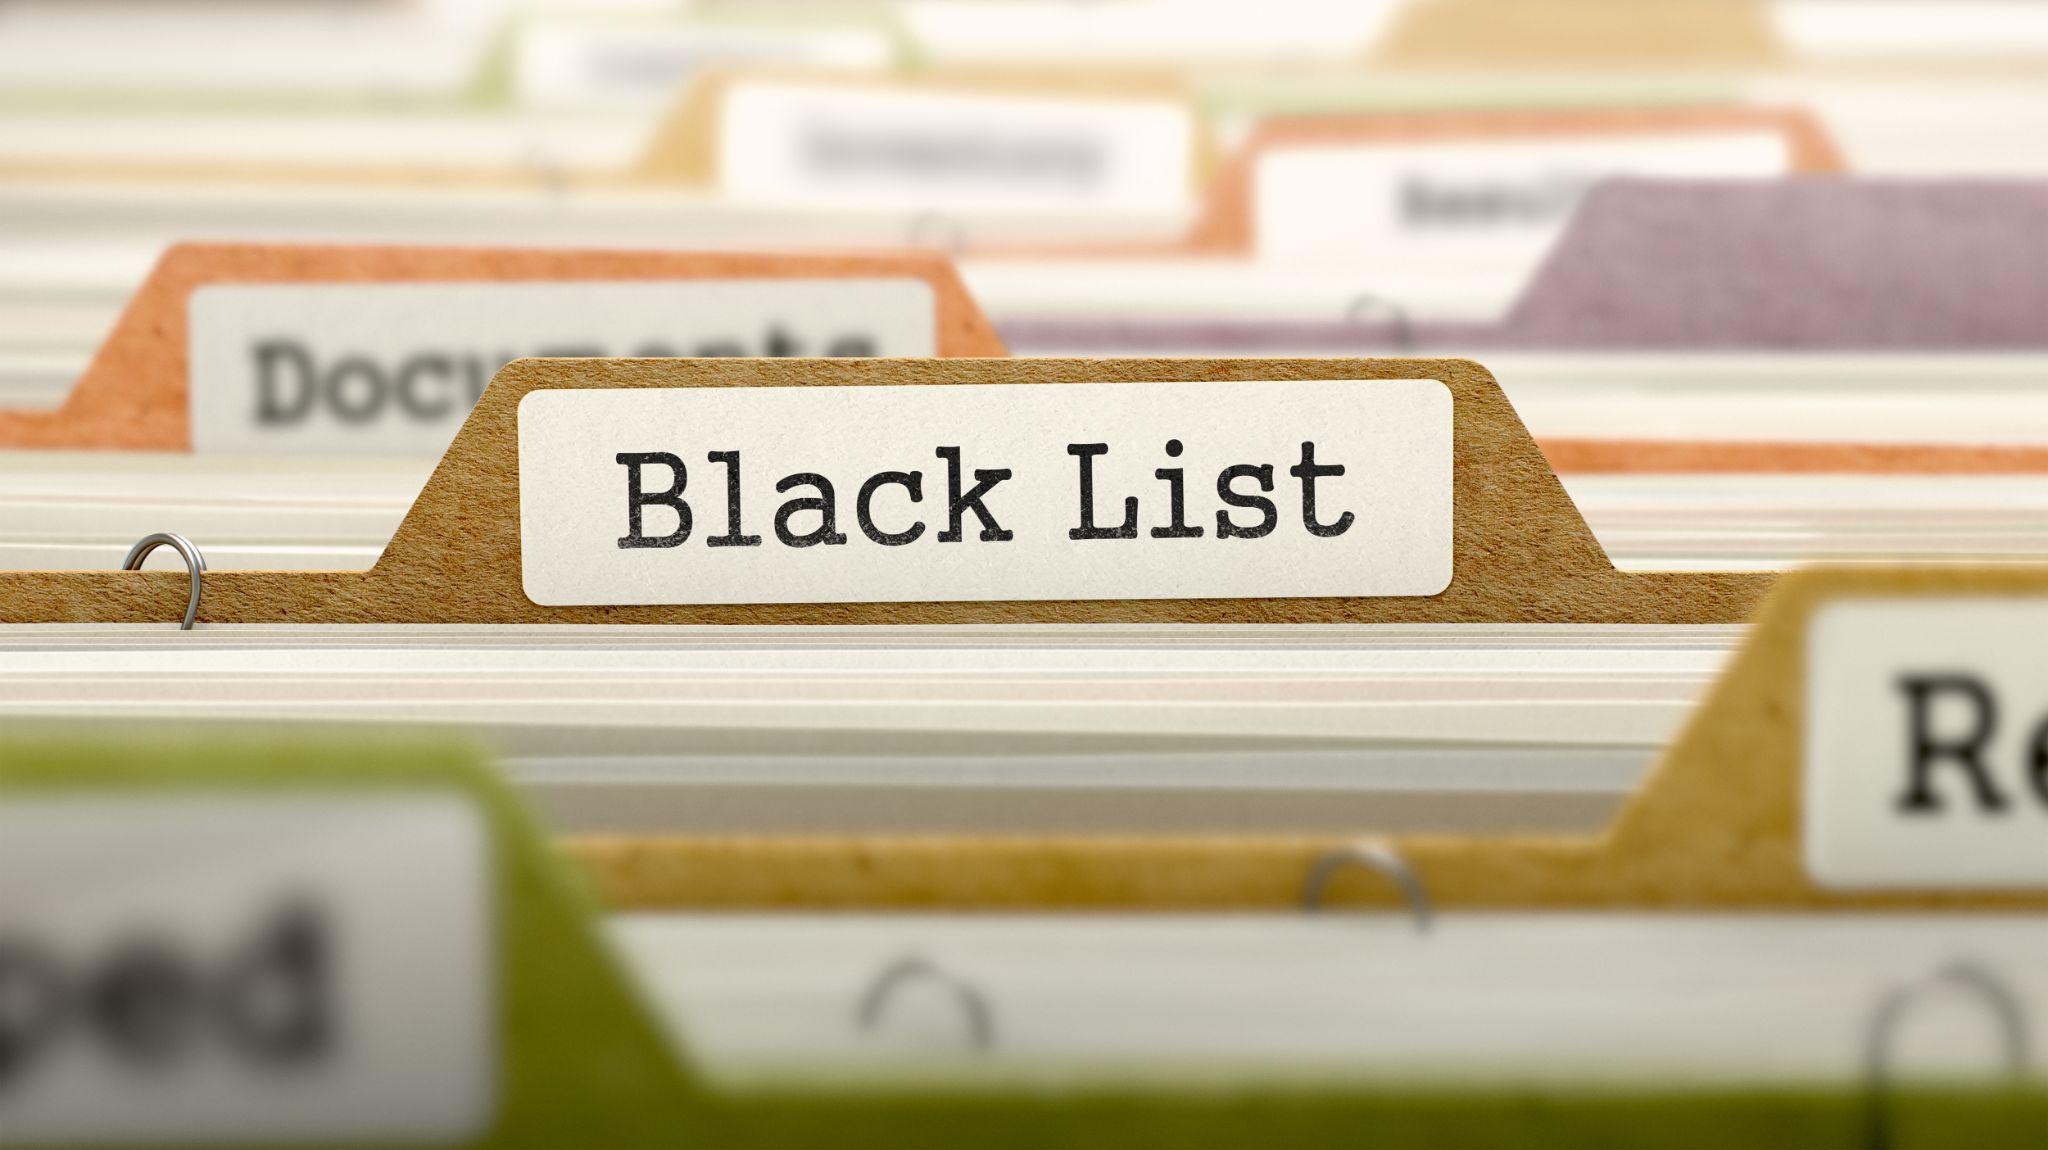 Black List - folder register name in directory